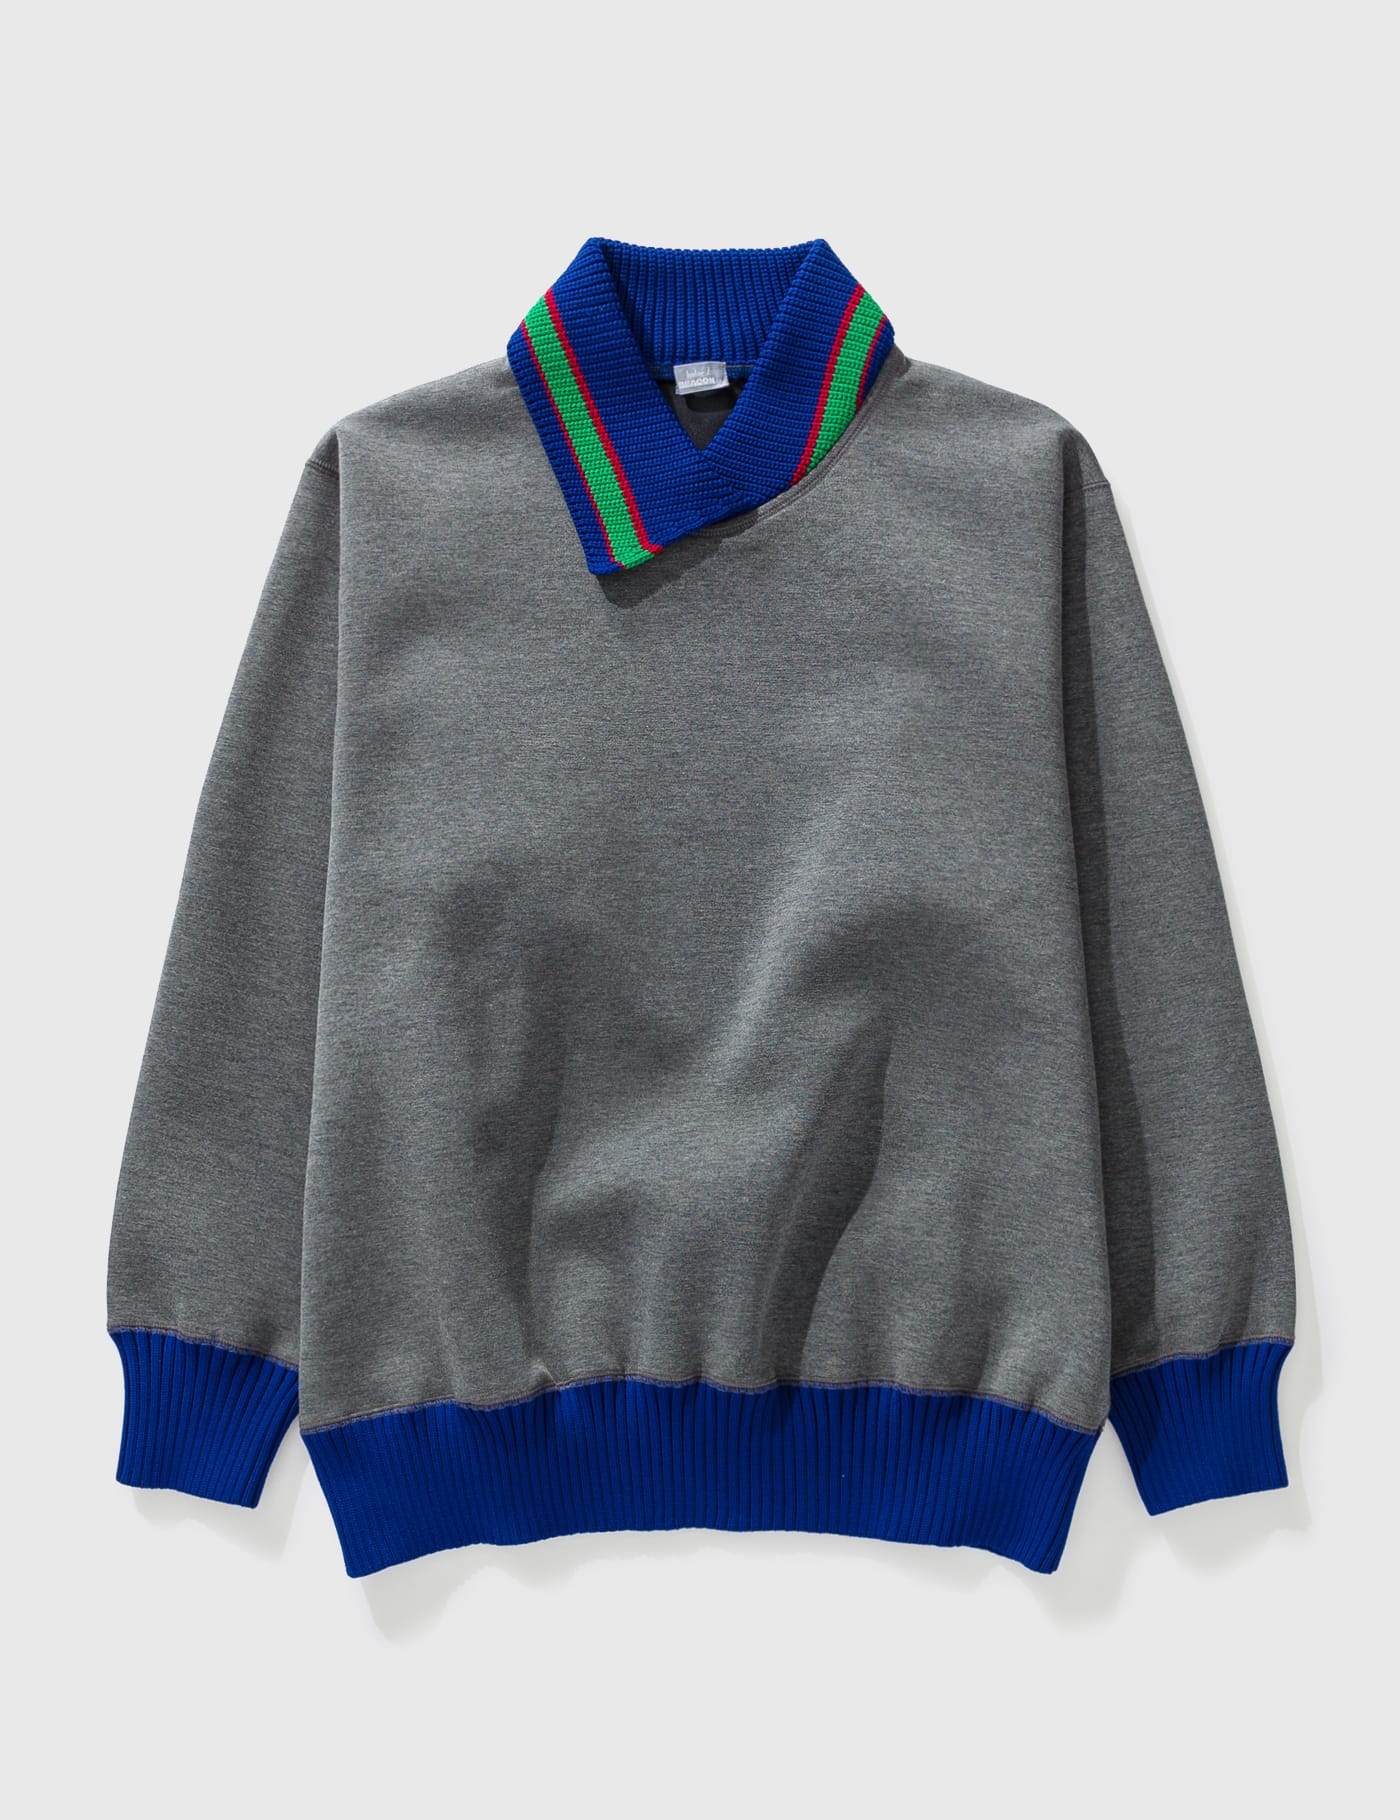 discount 70% Multicolored 42                  EU Primark sweatshirt WOMEN FASHION Jumpers & Sweatshirts Sweatshirt Hoodless 